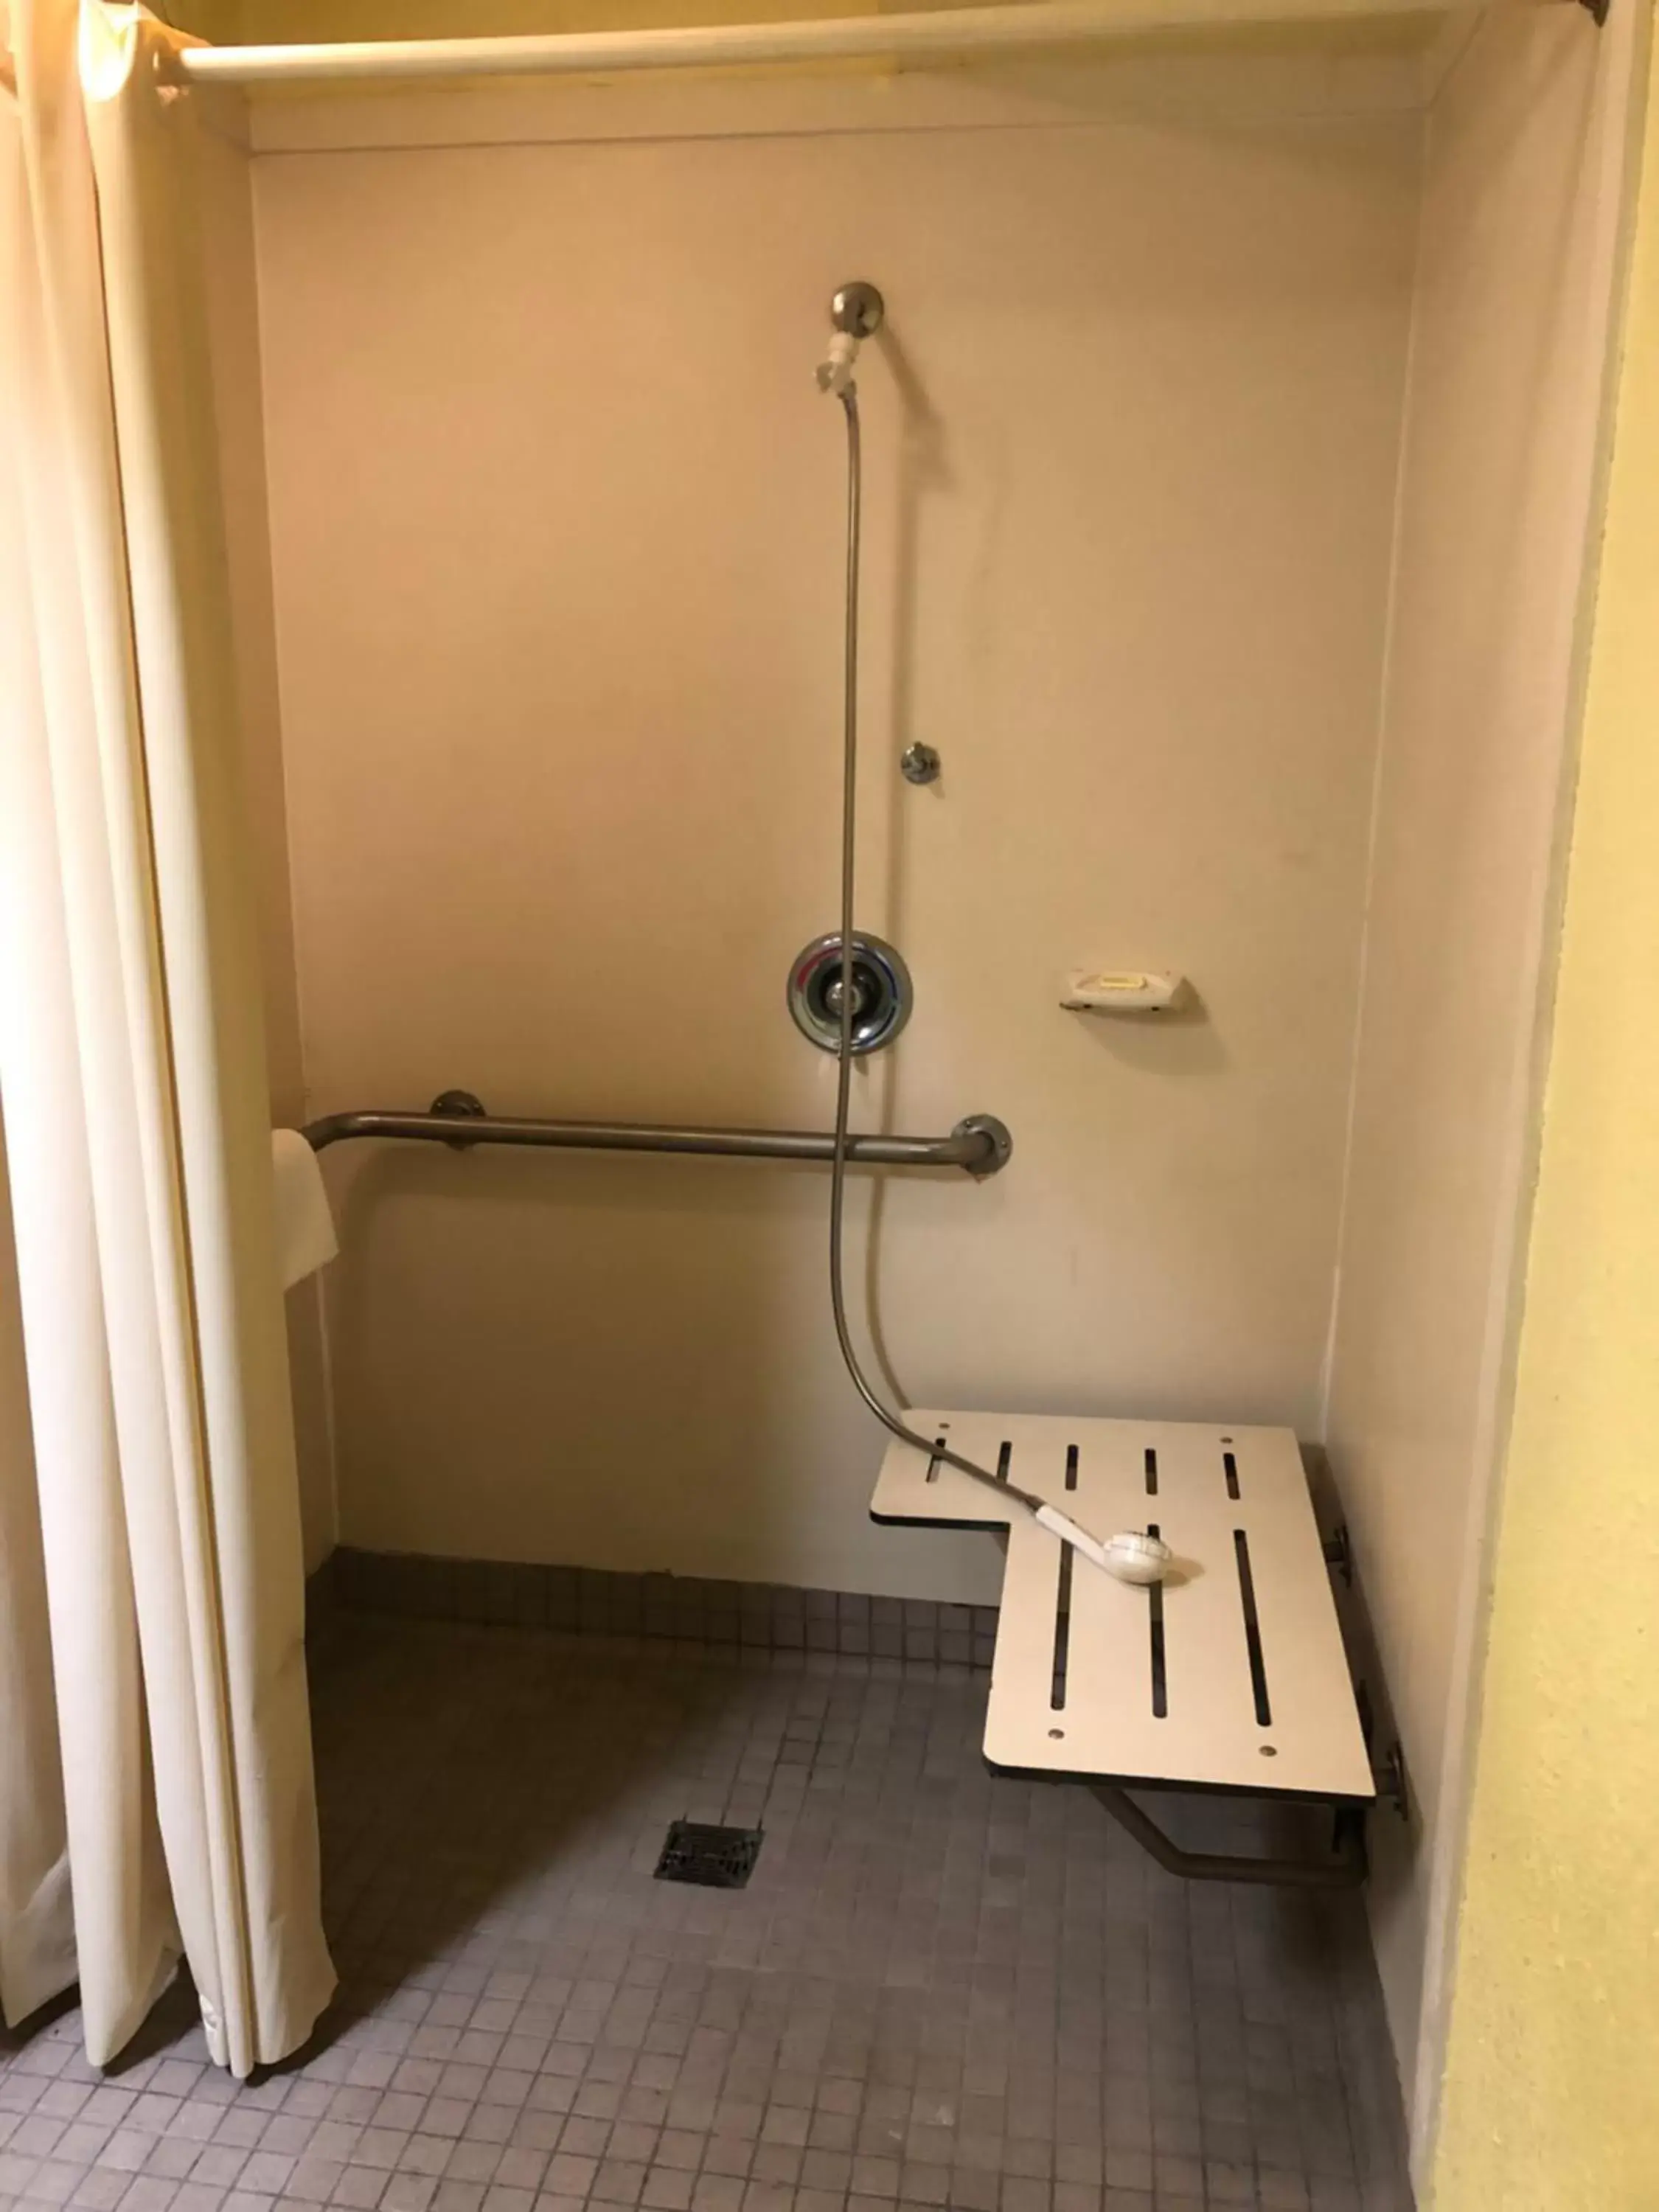 Bathroom in Travel Inn Motel